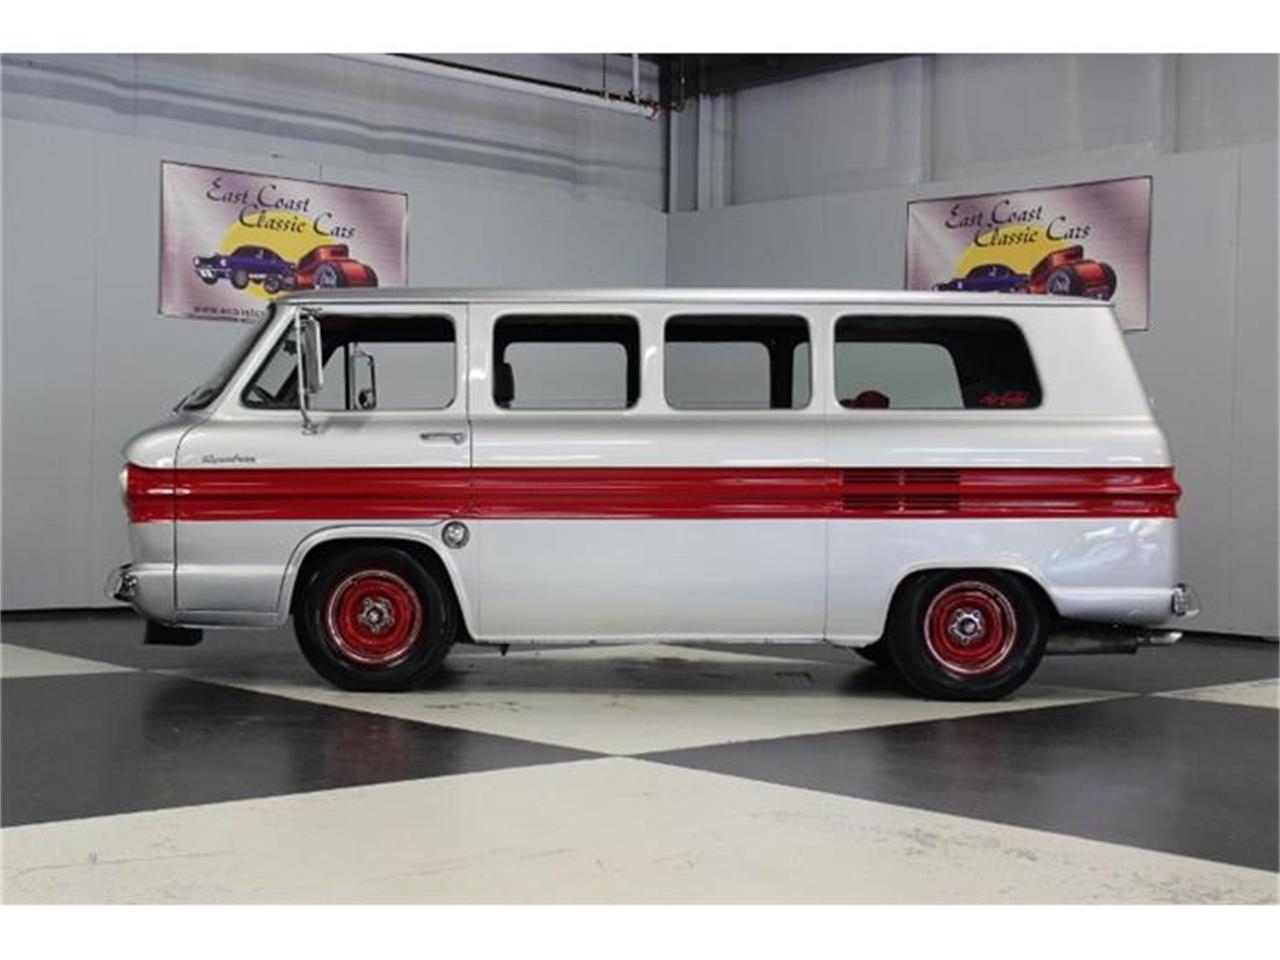 1965 chevy passenger van for sale in california